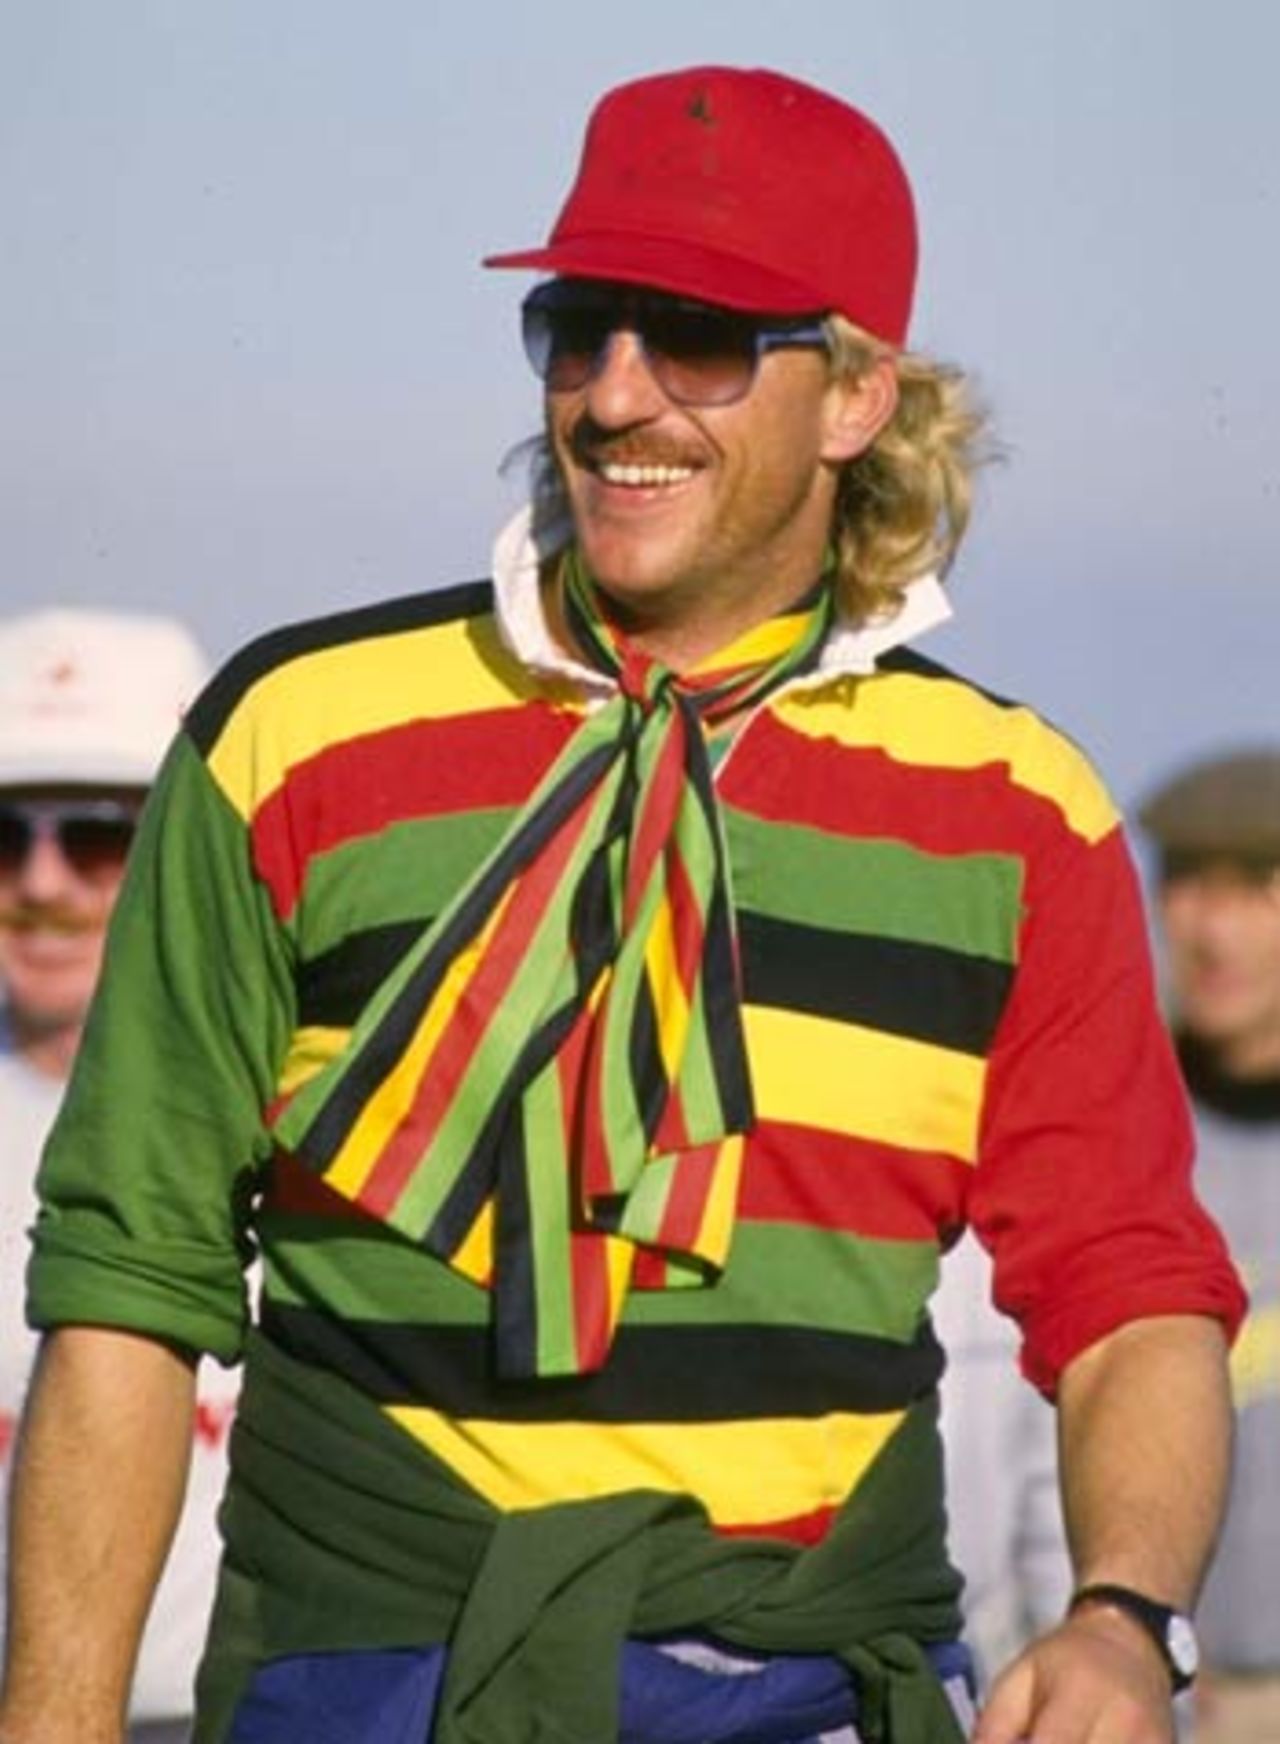 Ian Botham on his charity walk in 1985